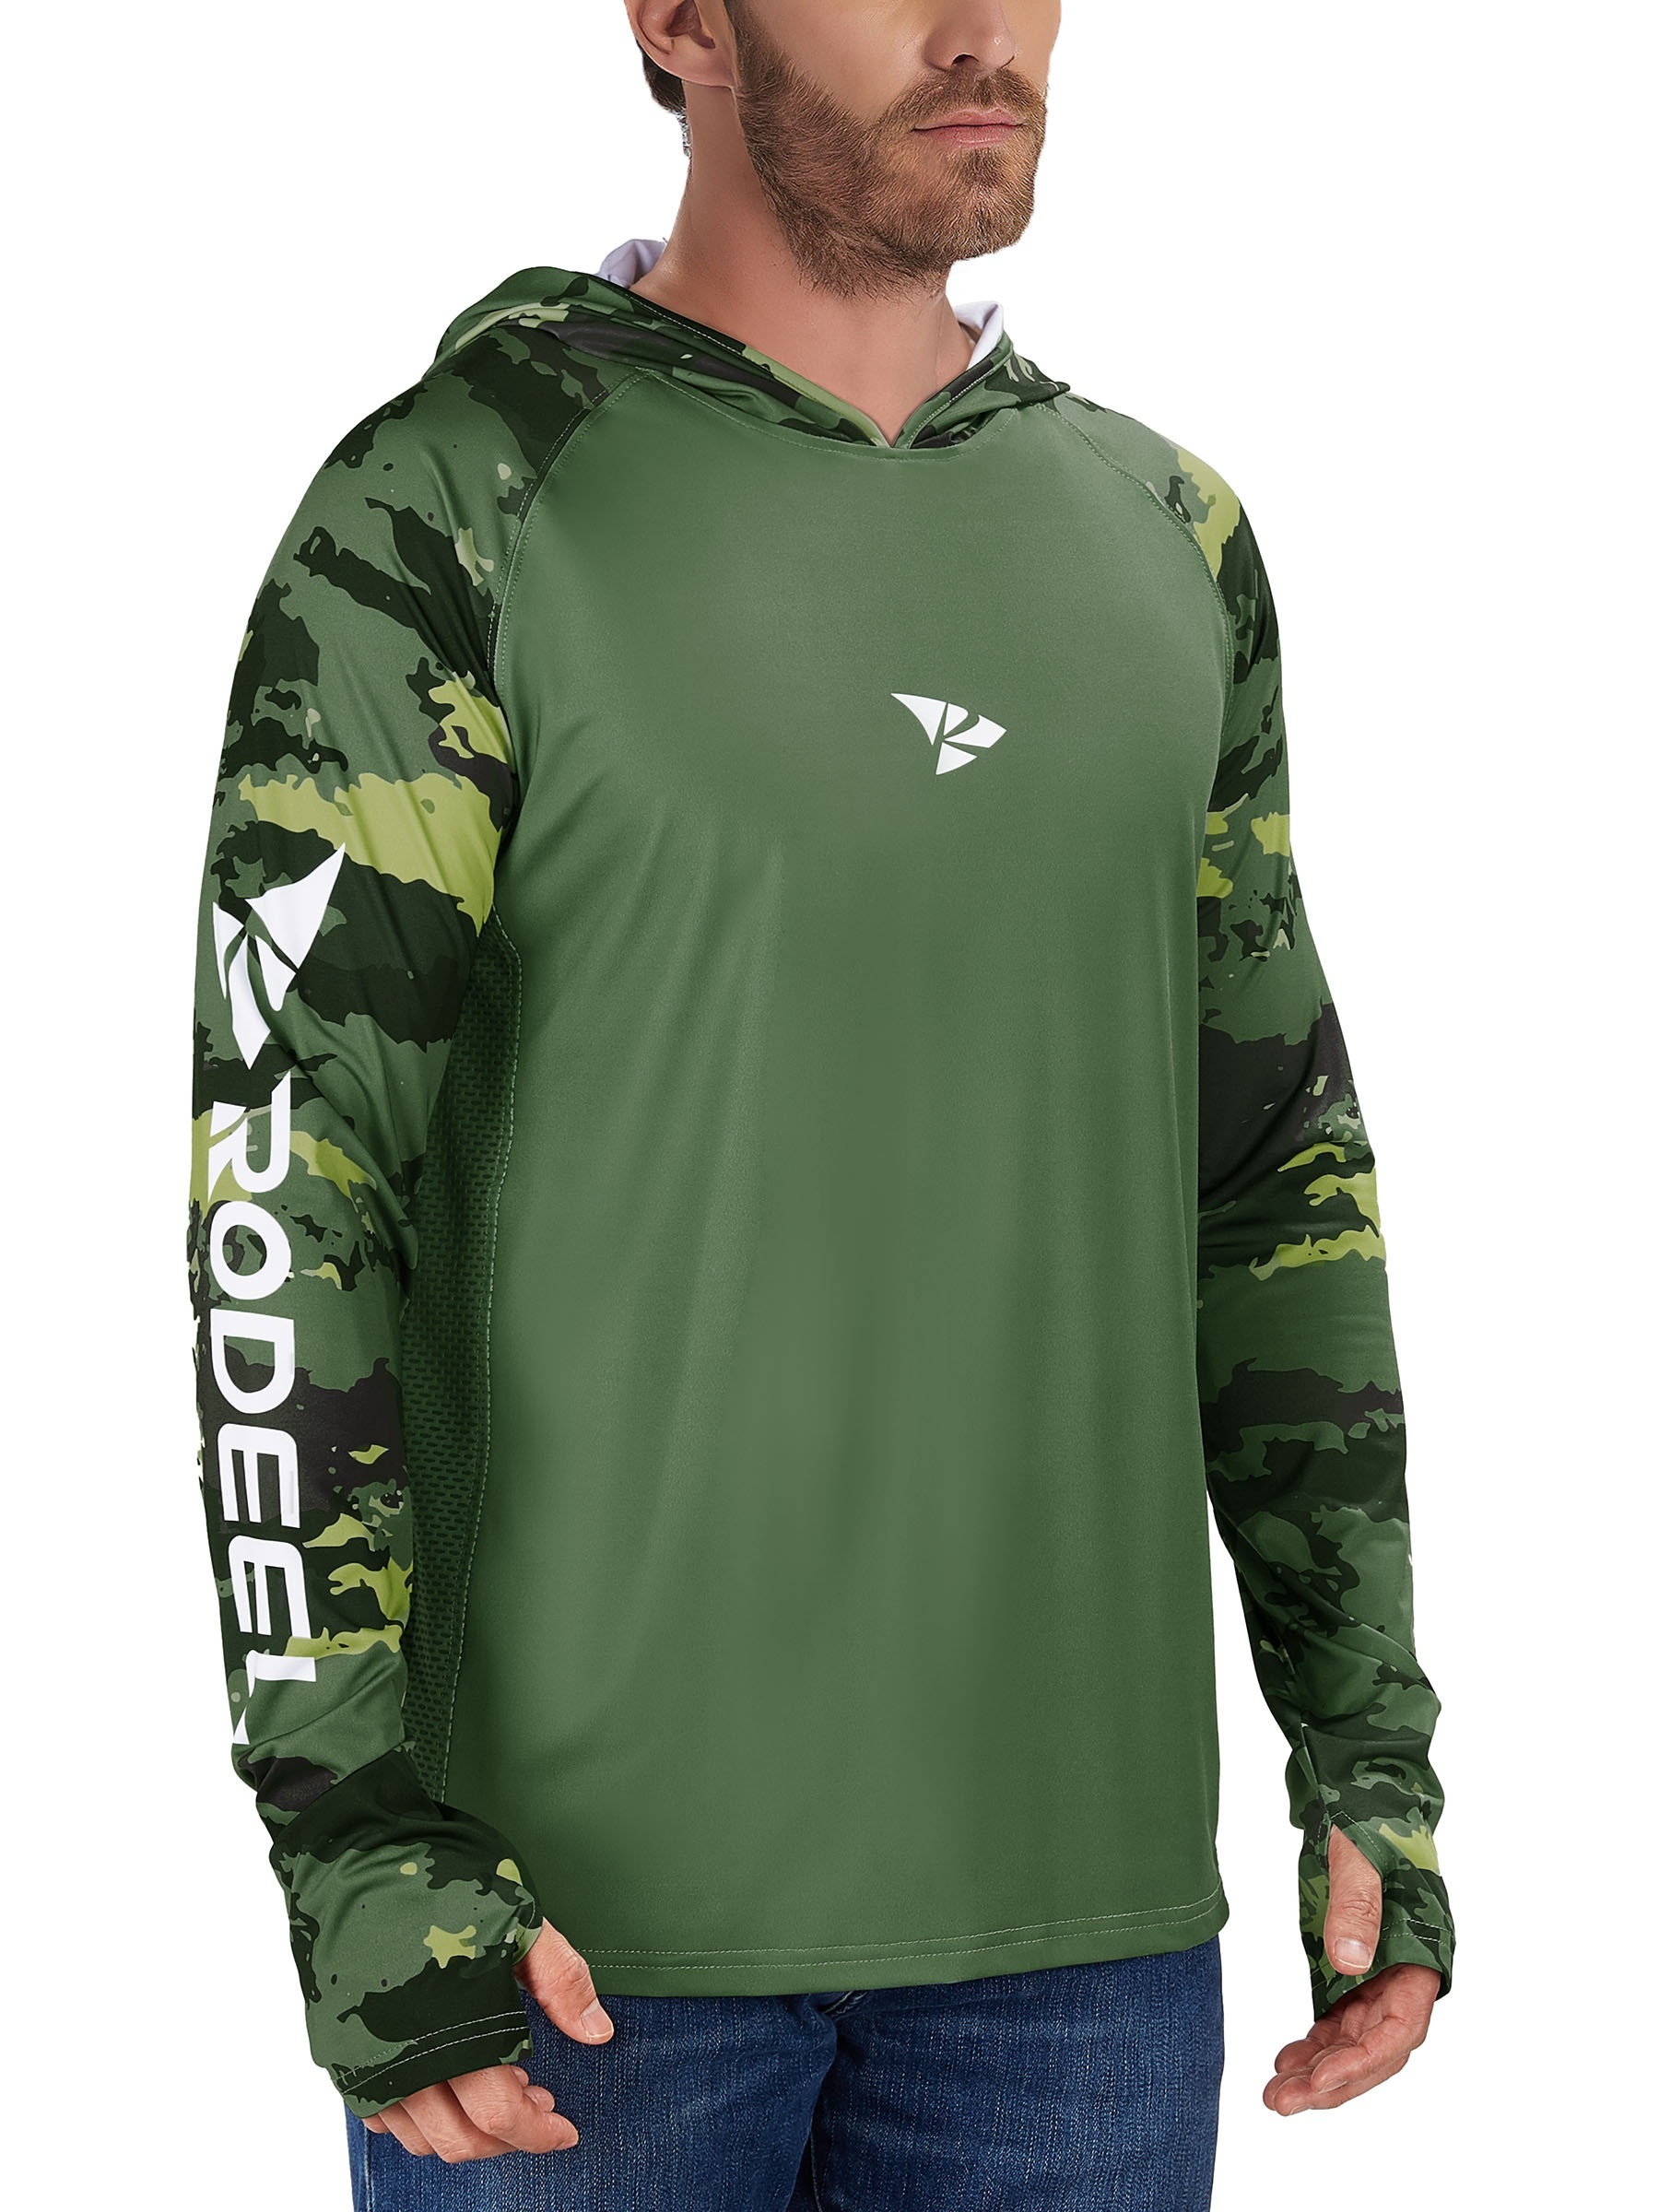 Performance Fishing Hoodie Shirt UPF 50+ (Green Camo)